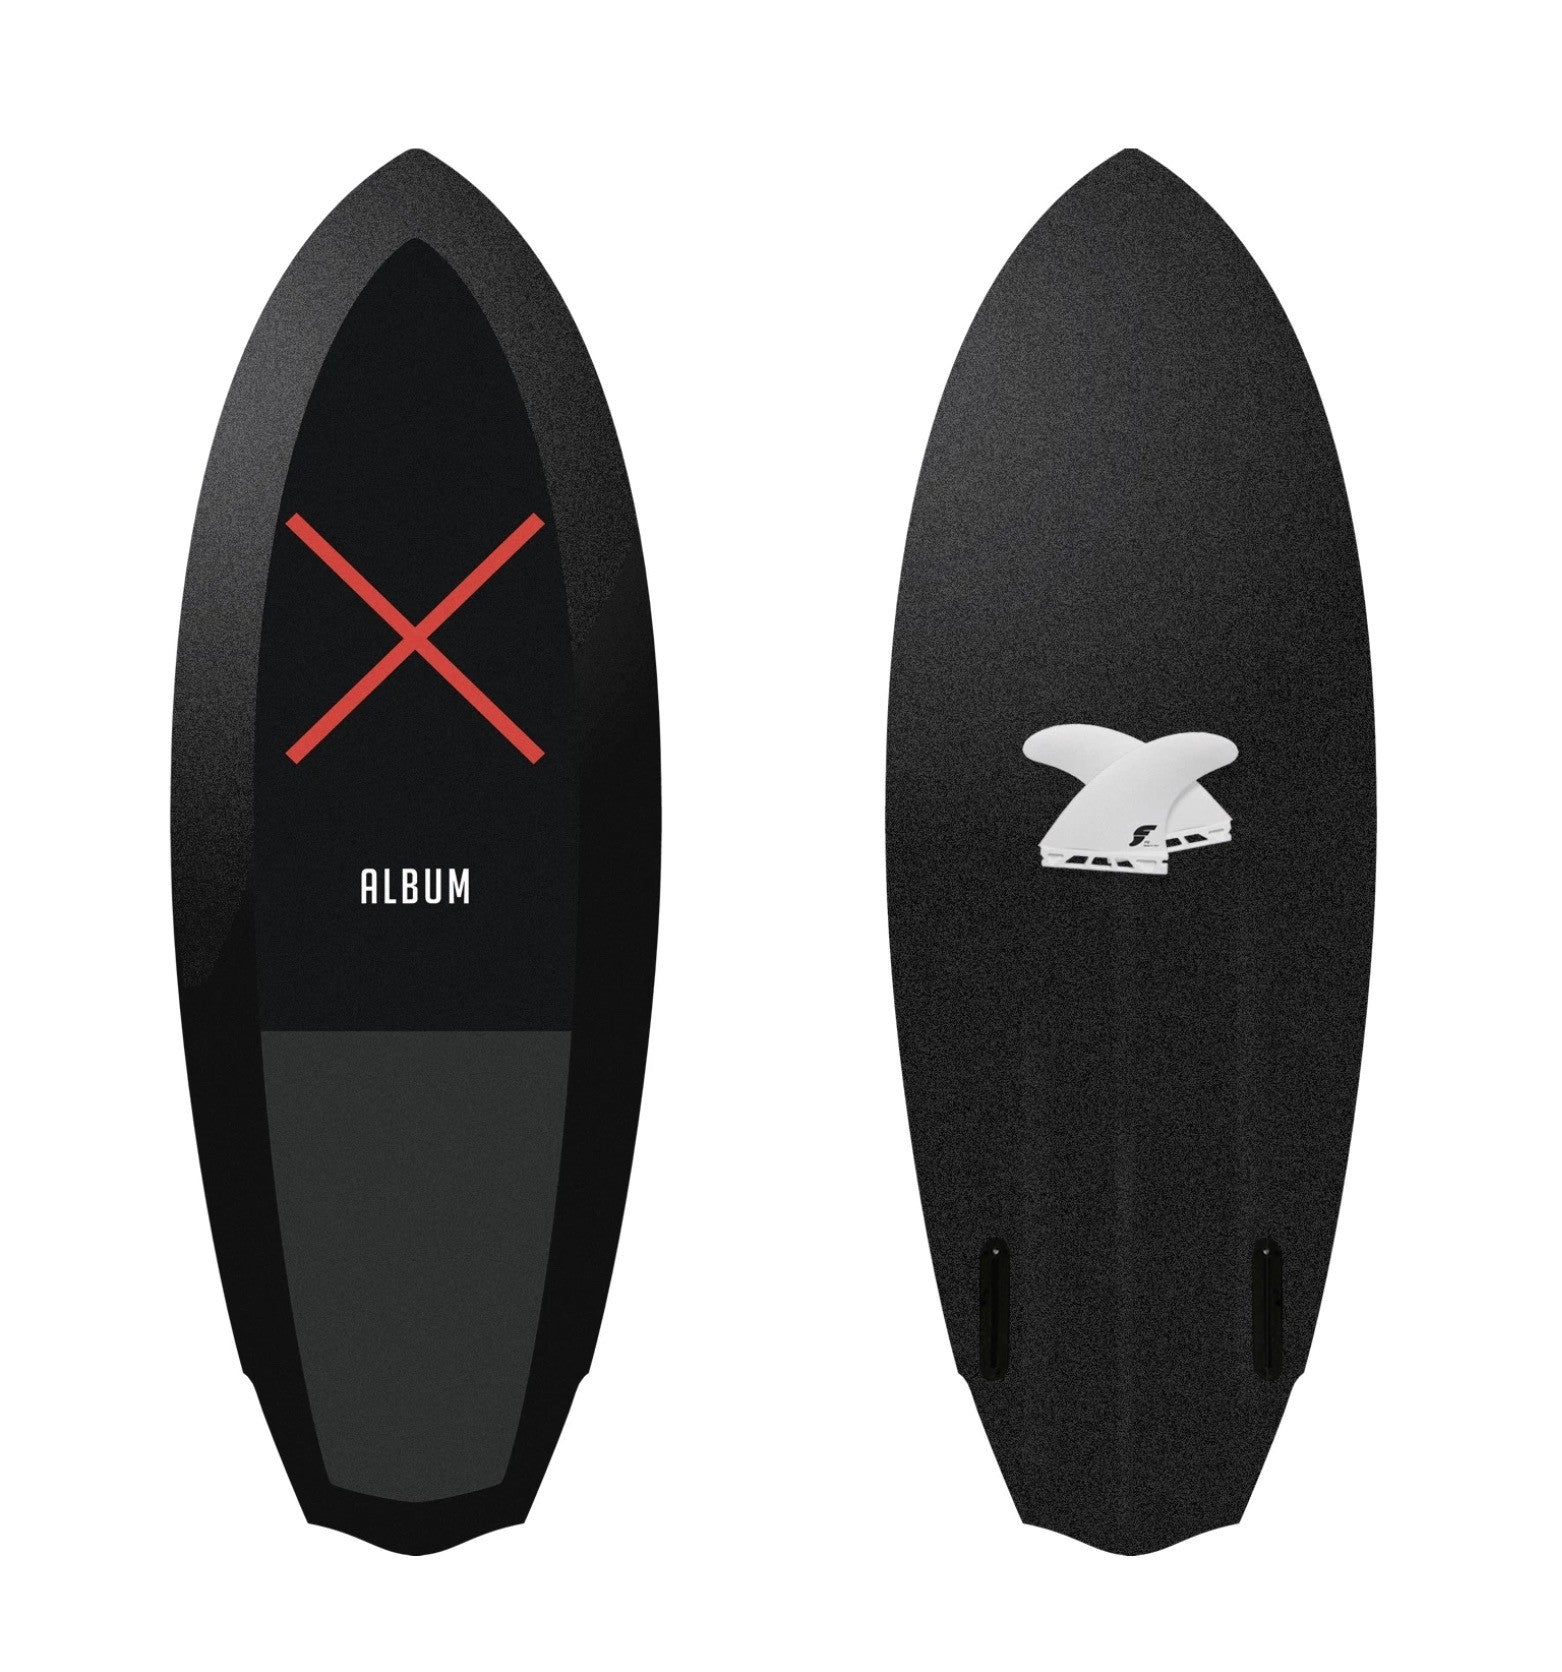 ALBUM Surfboards - Seaskate Fish 4'10 Soft Top - Insanity X